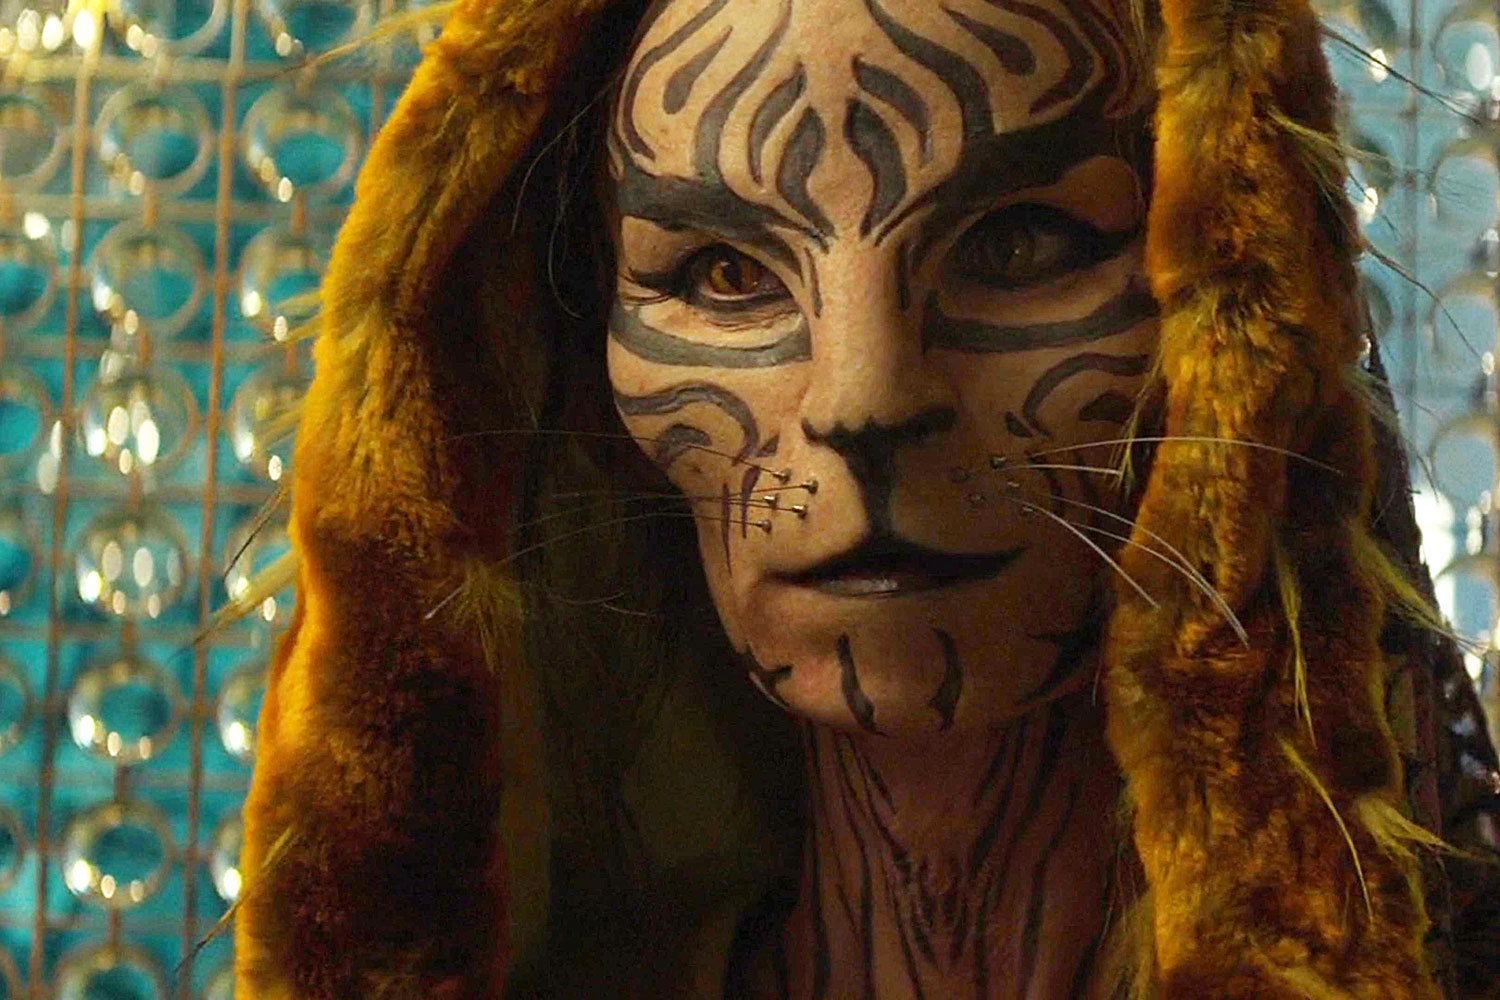 Eugenie Bondurant as Tigris in 'The Hunger Games: Mockingjay Part 2